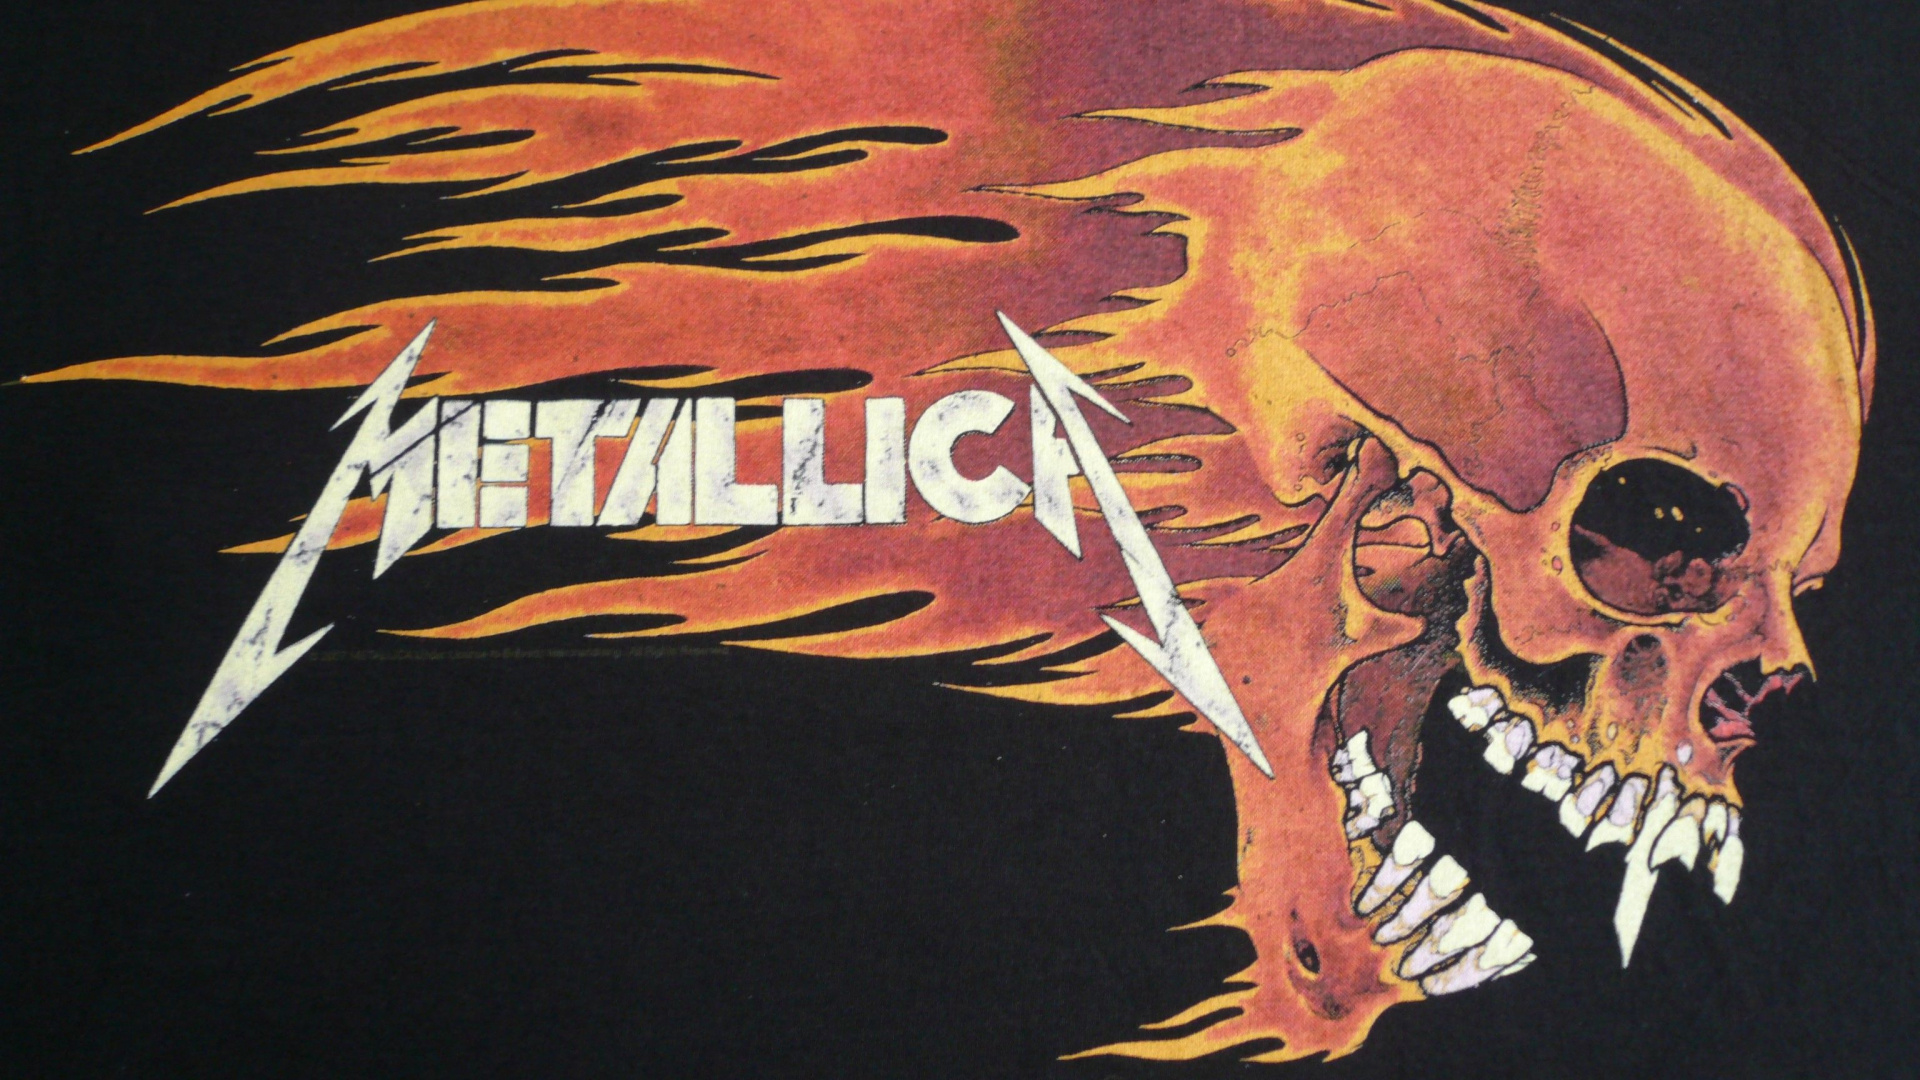 Metallica, Camisa, Heavy Metal, Cráneo, Hueso. Wallpaper in 1920x1080 Resolution